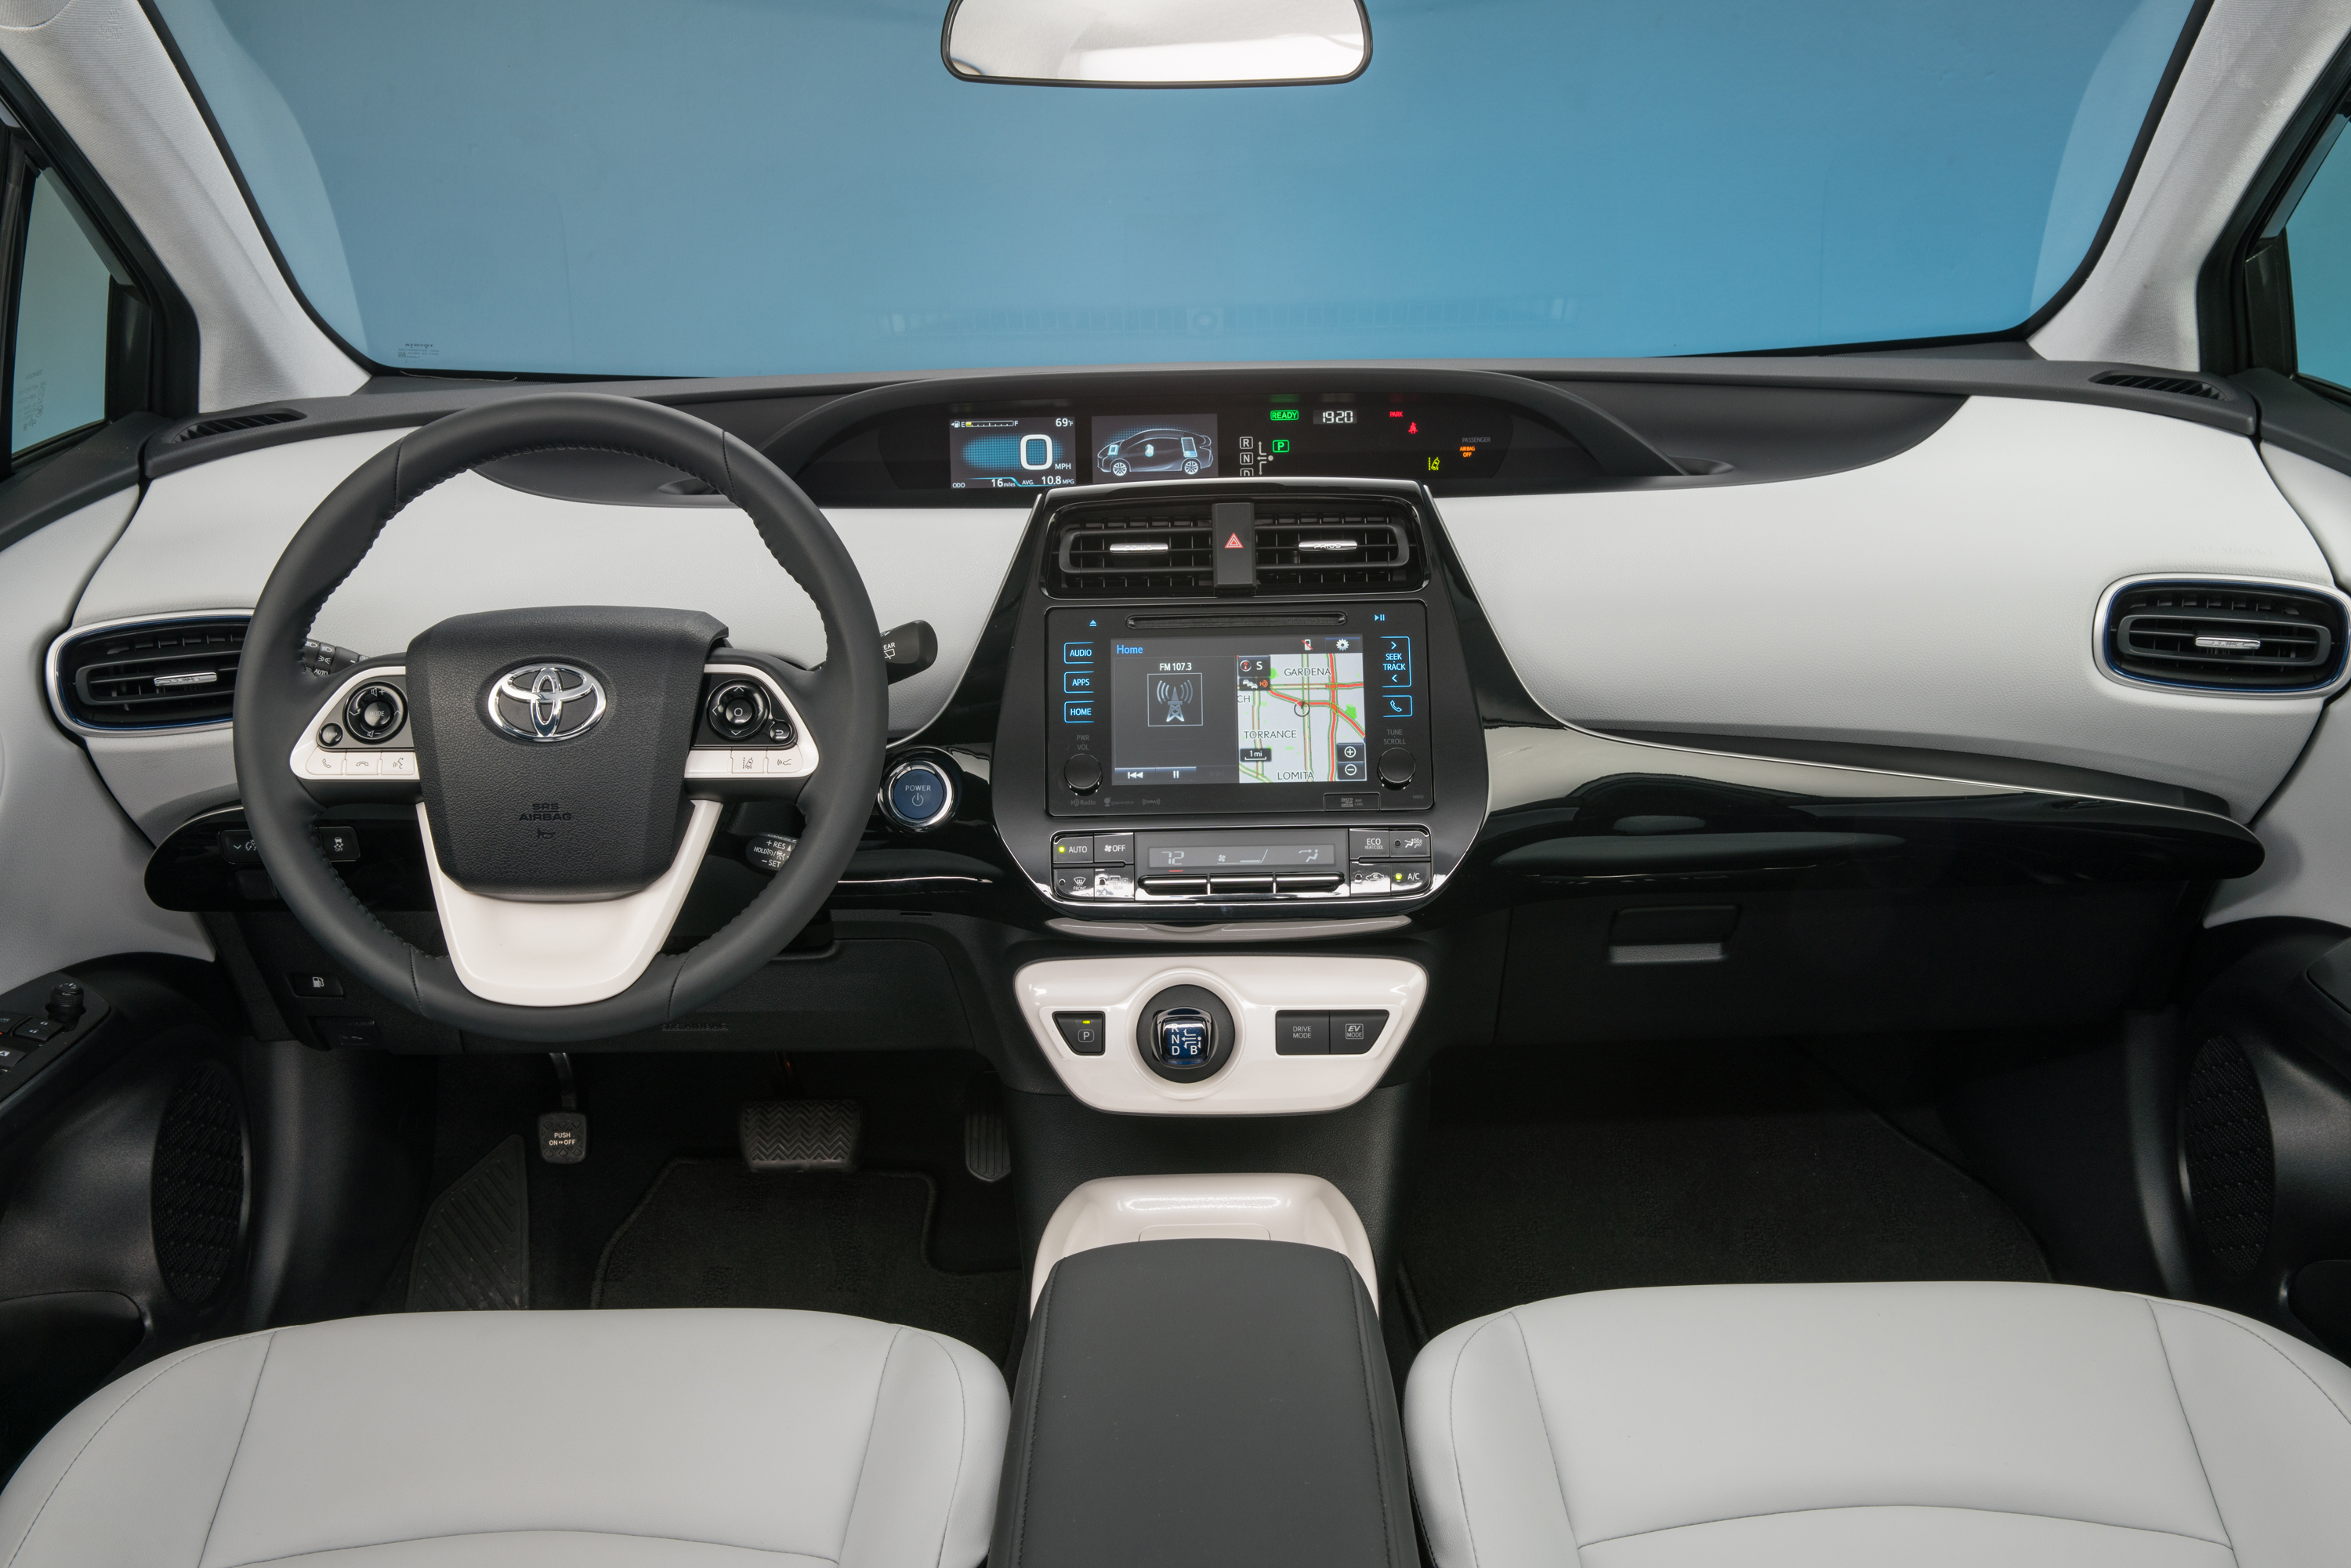 Тойота гибрид 2016. Toyota Prius 2016 салон. Toyota Prius 2016 Interior. Тойота Приус гибрид 2016. Toyota Prius 2017 салон.